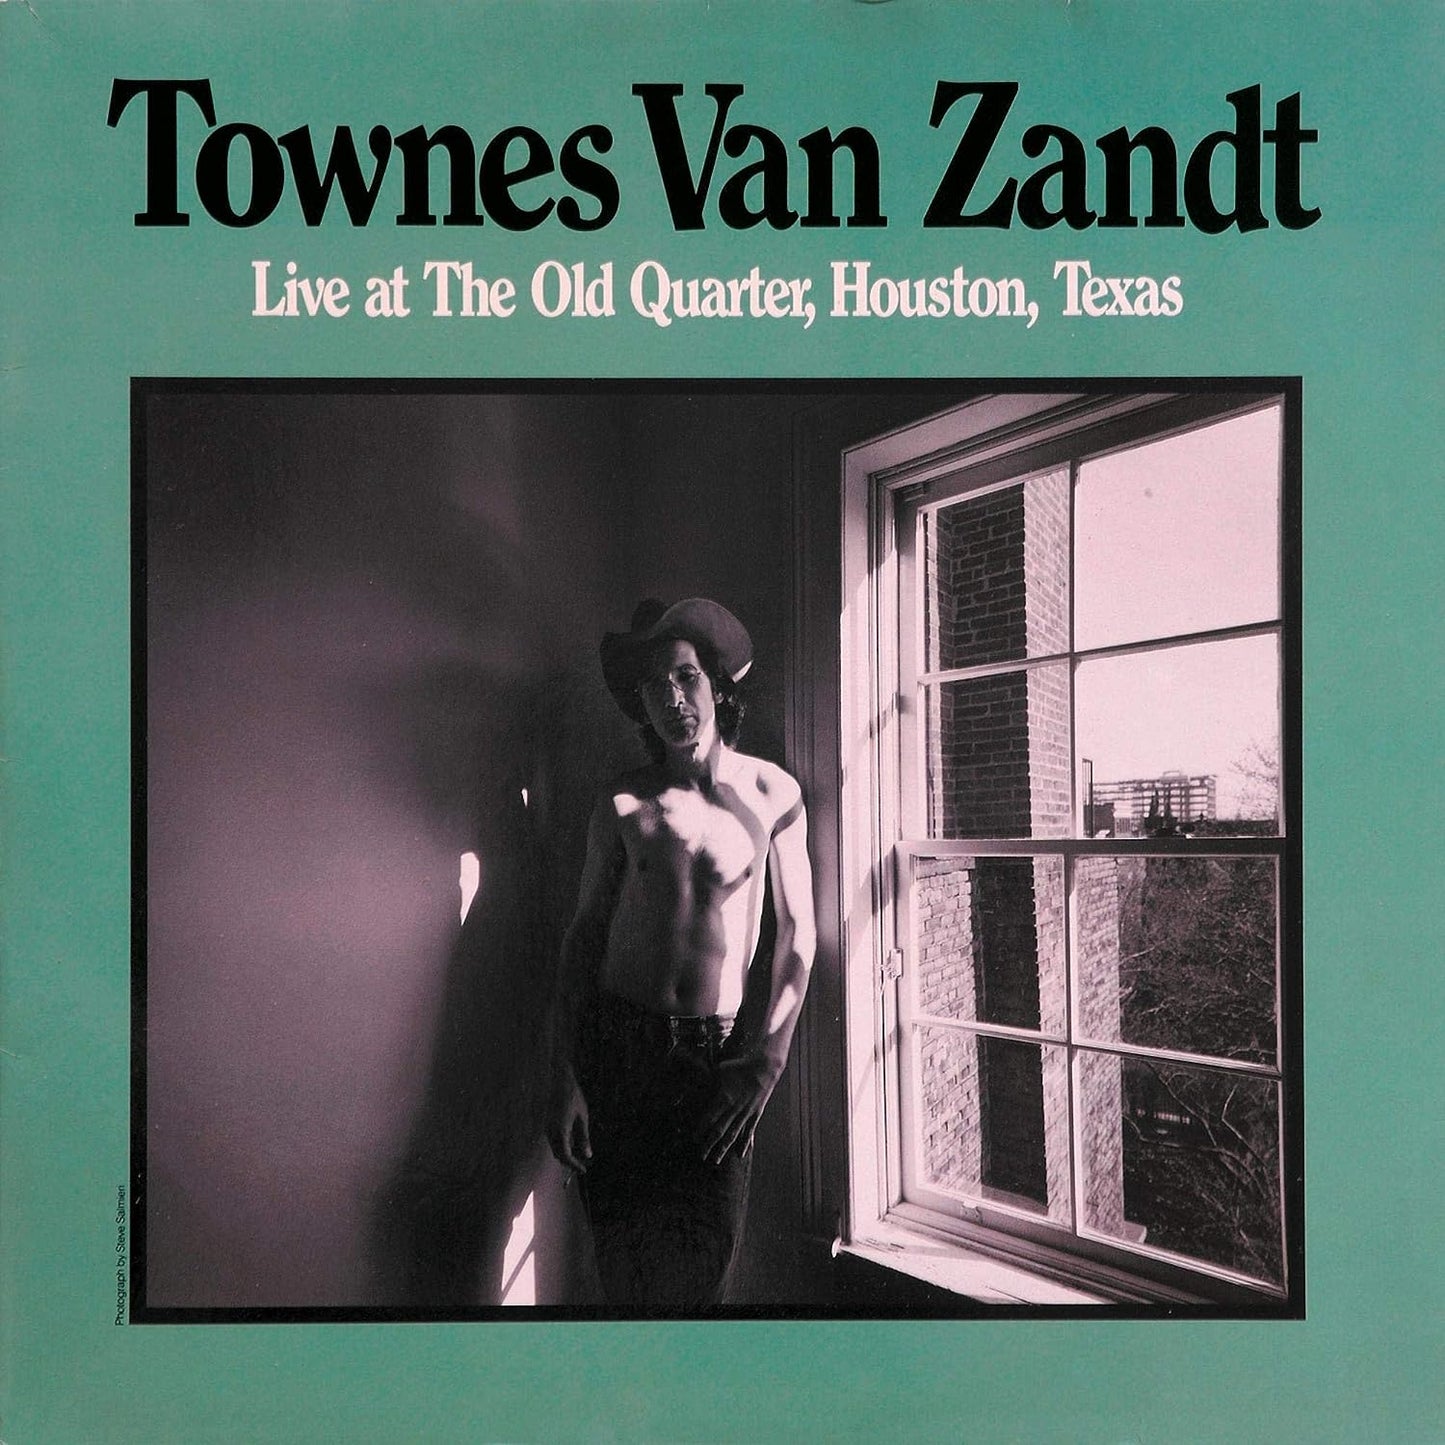 Townes Van Zandt - Live at the Old Quarter (Houston Texas) [2LP] (180 Gram)